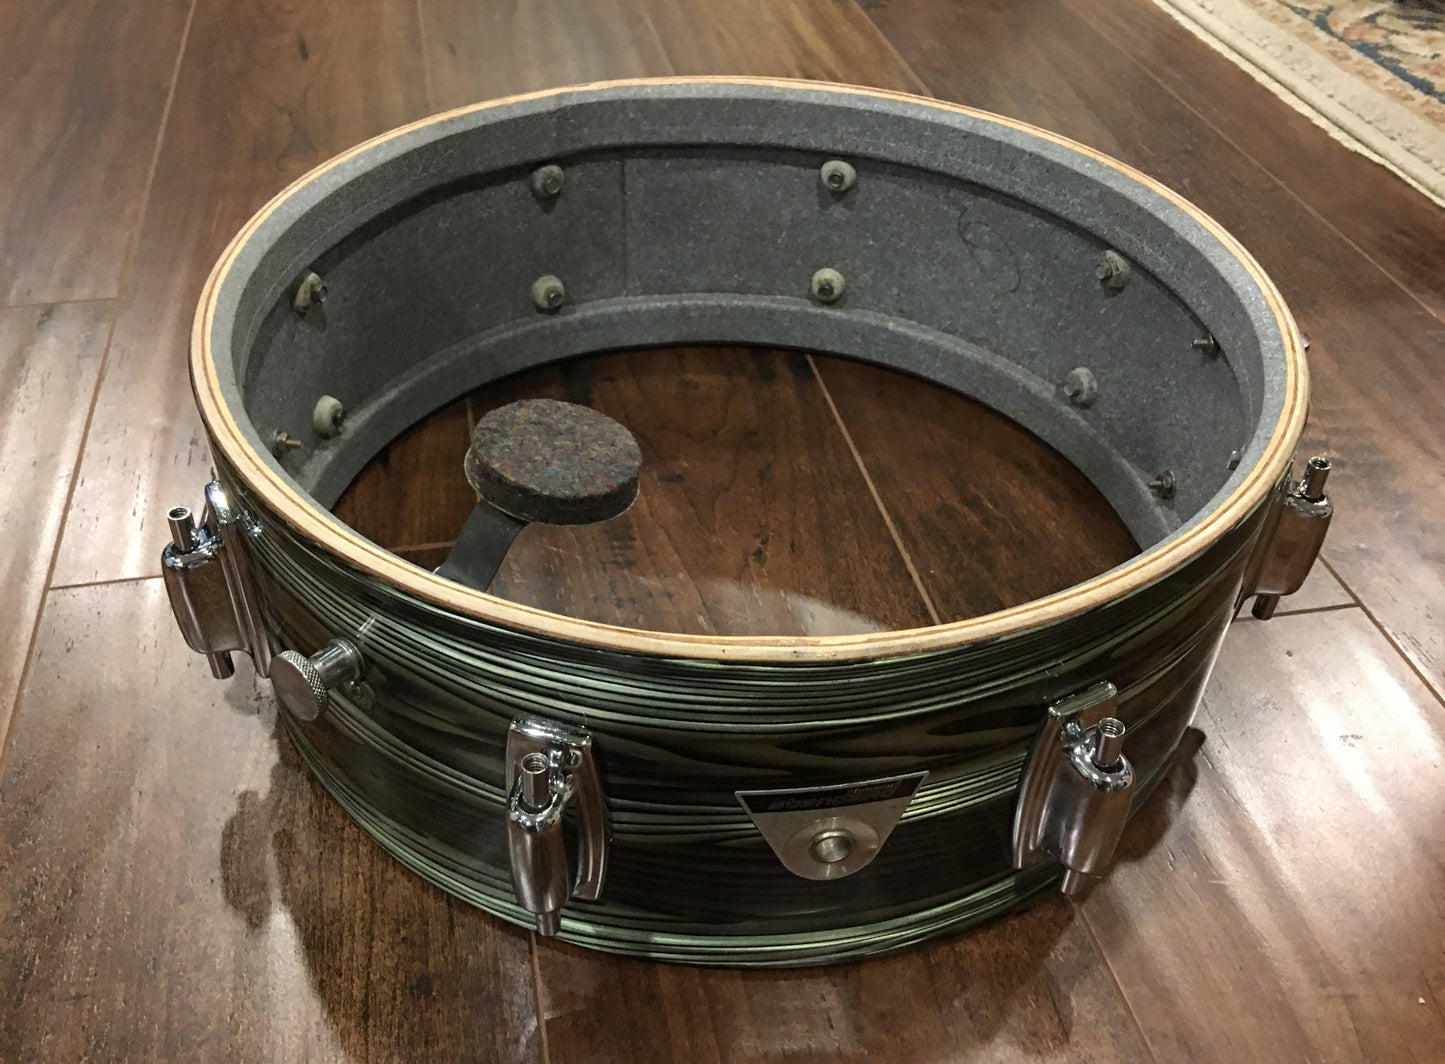 1969 Ludwig 5x14 Standard Snare Drum 3ply Avocado Strata